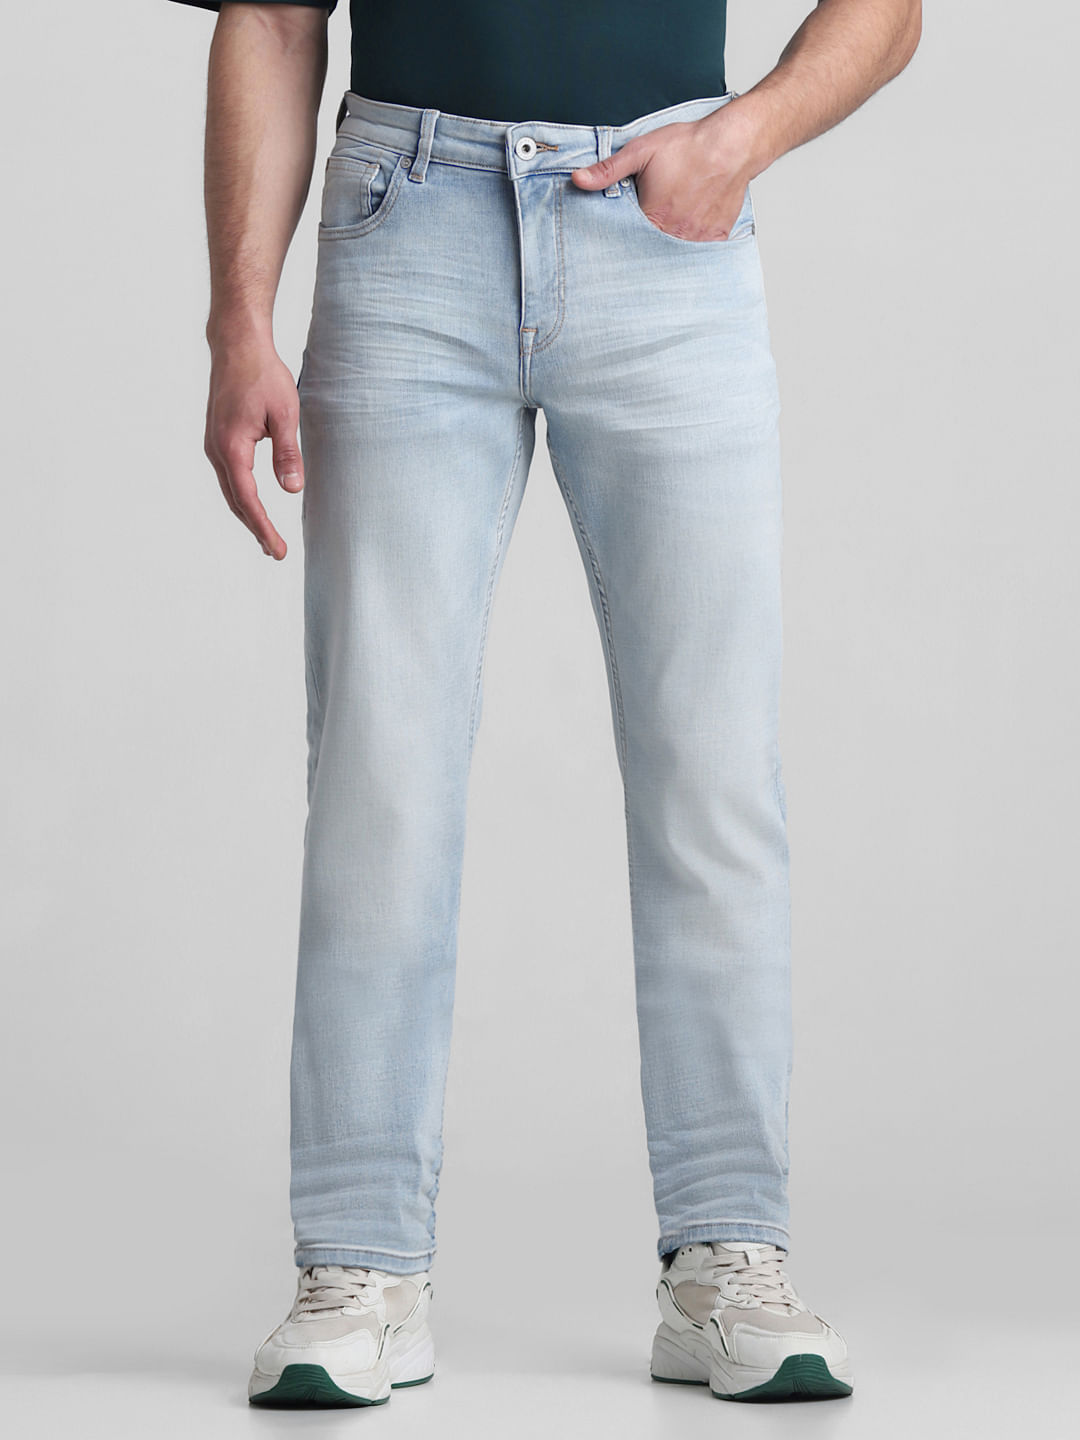 Ernkv Men's Pants Button Zipper Custom Fit Irregular Ripped Solid Color  Comfy Lounge Casual Jeans Denim Pants For Husband Boyfriend Son Fashion  Full Length Trousers Dark Gray L - Walmart.com